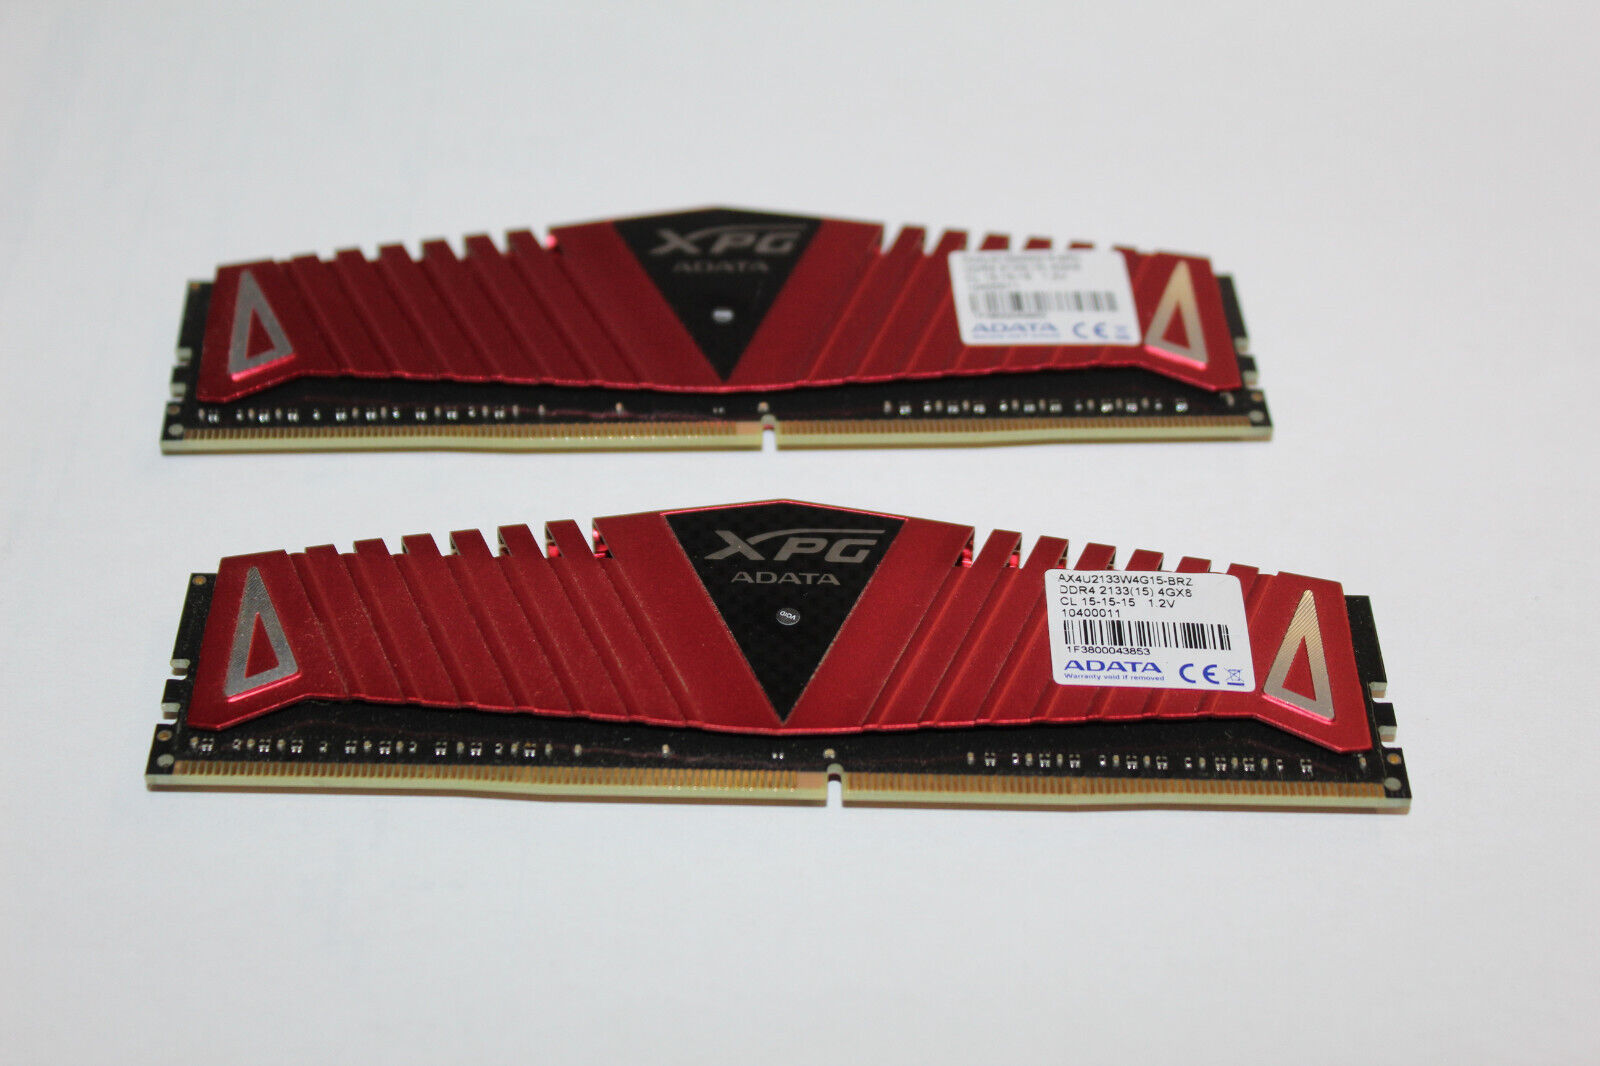 Awesome ADATA XPG 8GB (2x4GB) DDR4 2133MHz Memory Kit RAM (AX4U2133W4)